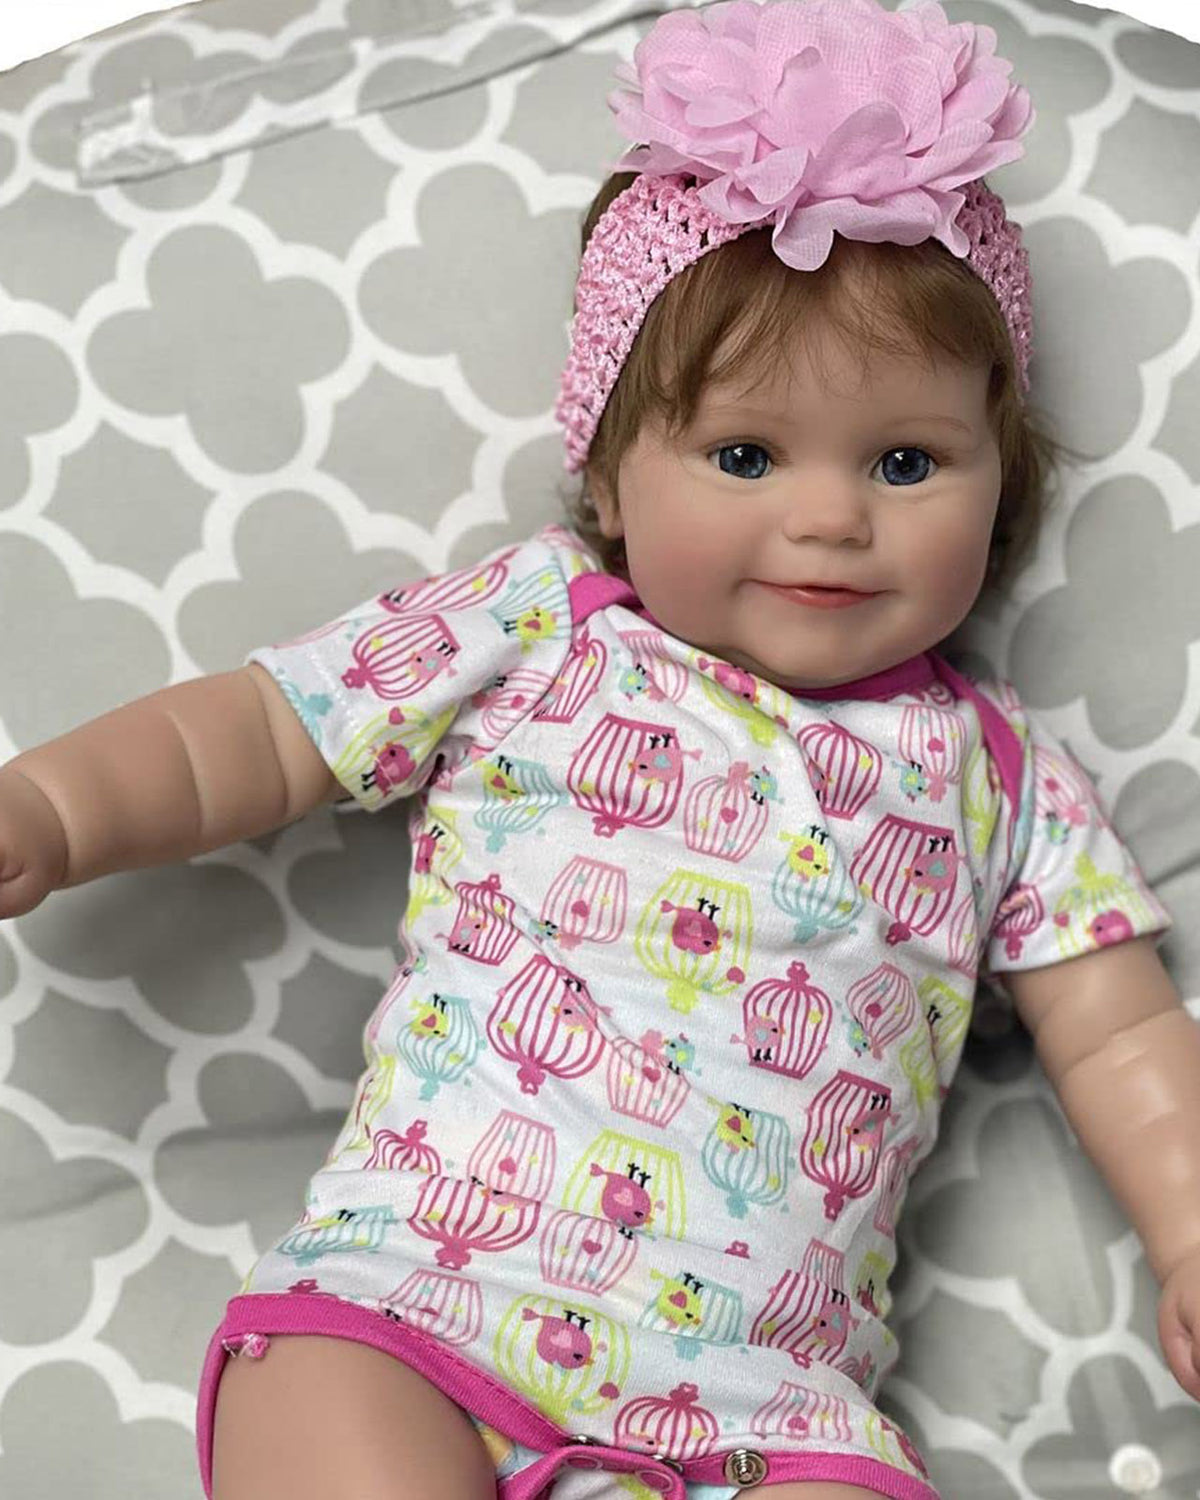 Barbara - 20" Reborn Baby Dolls Realistic Awake Toddlers Girl with Sweet Smile